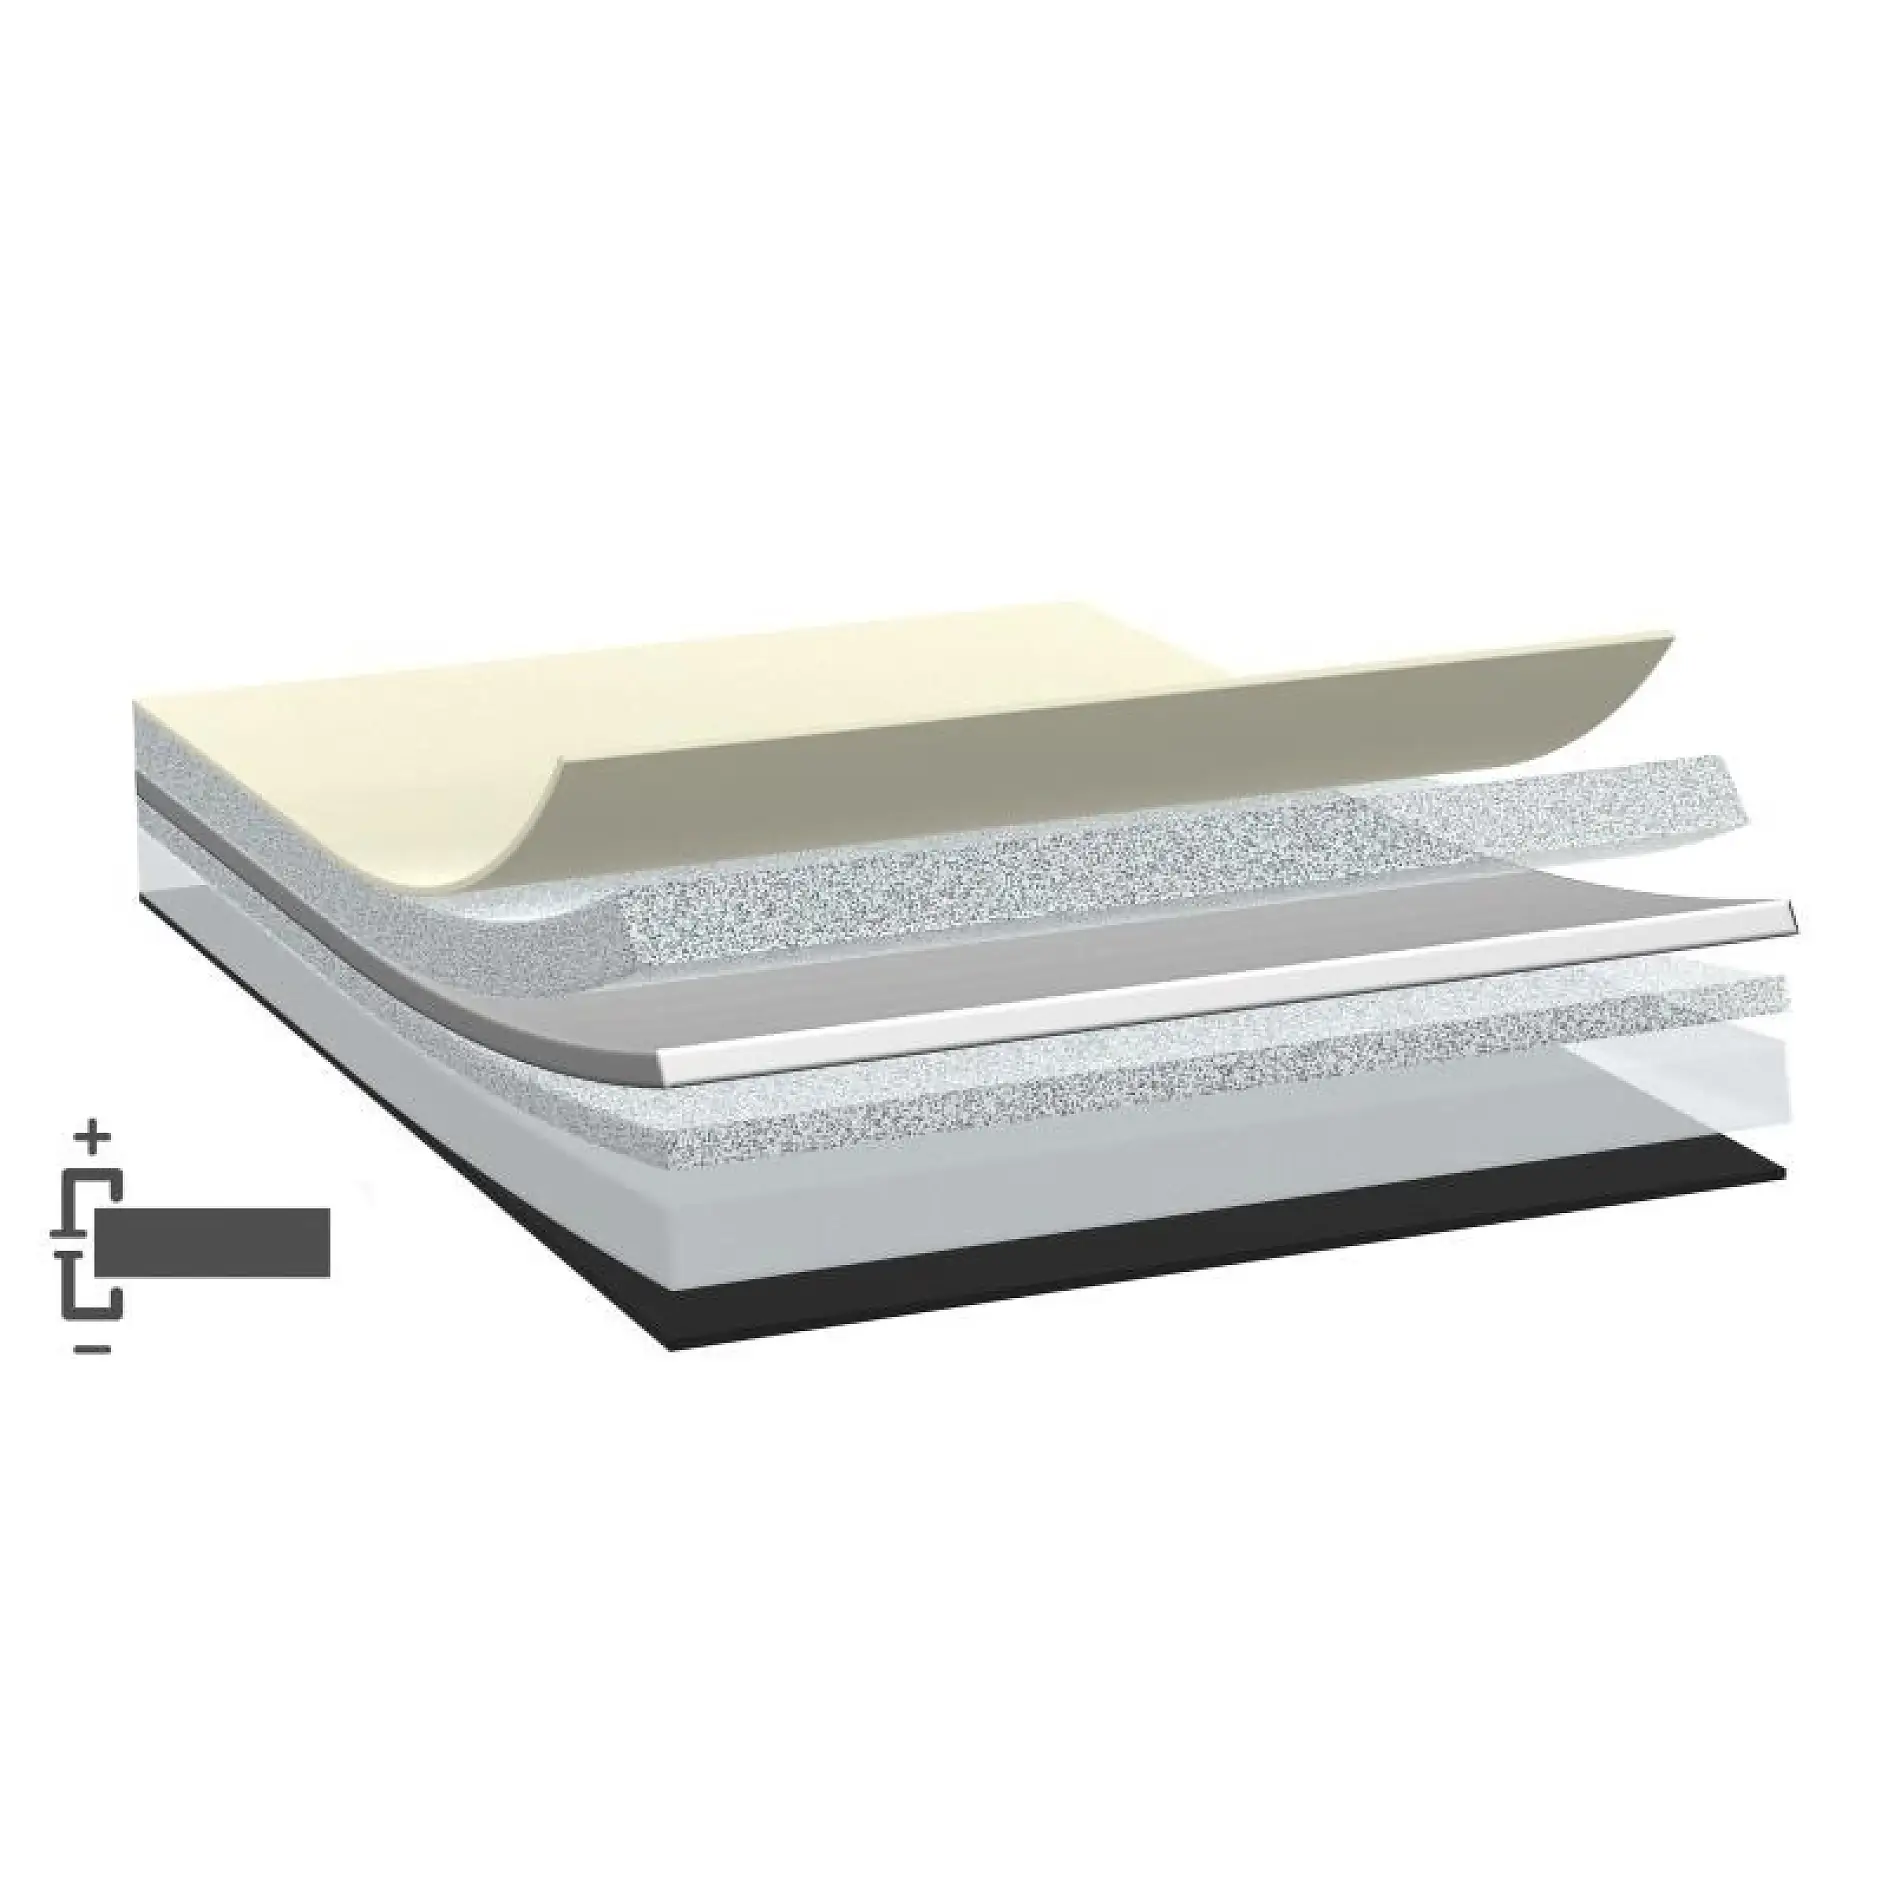 tesa-electronics-single-sided-ect-aluminum-acrylic-tape-black-with-aluminum-and-pet-backing-pe-coated-paper-liner-60827